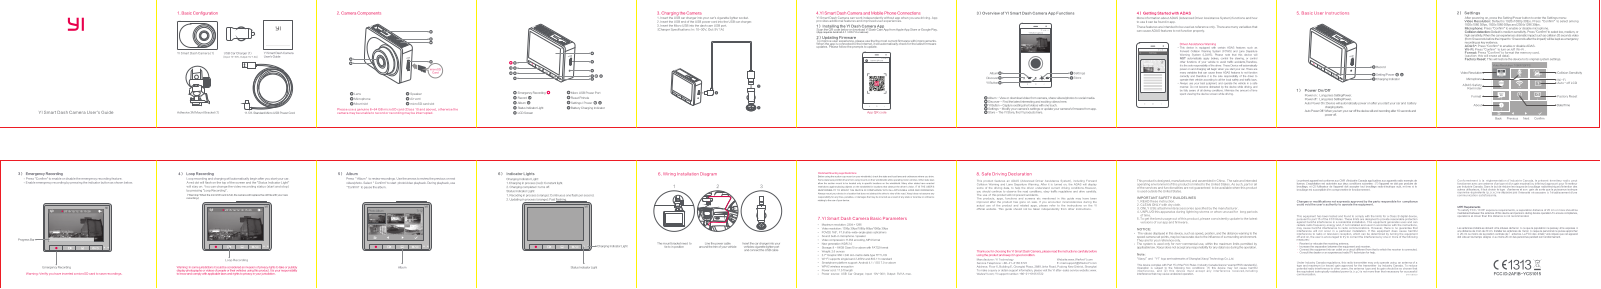 YI Technology YI Smart Dash Camera User Manual